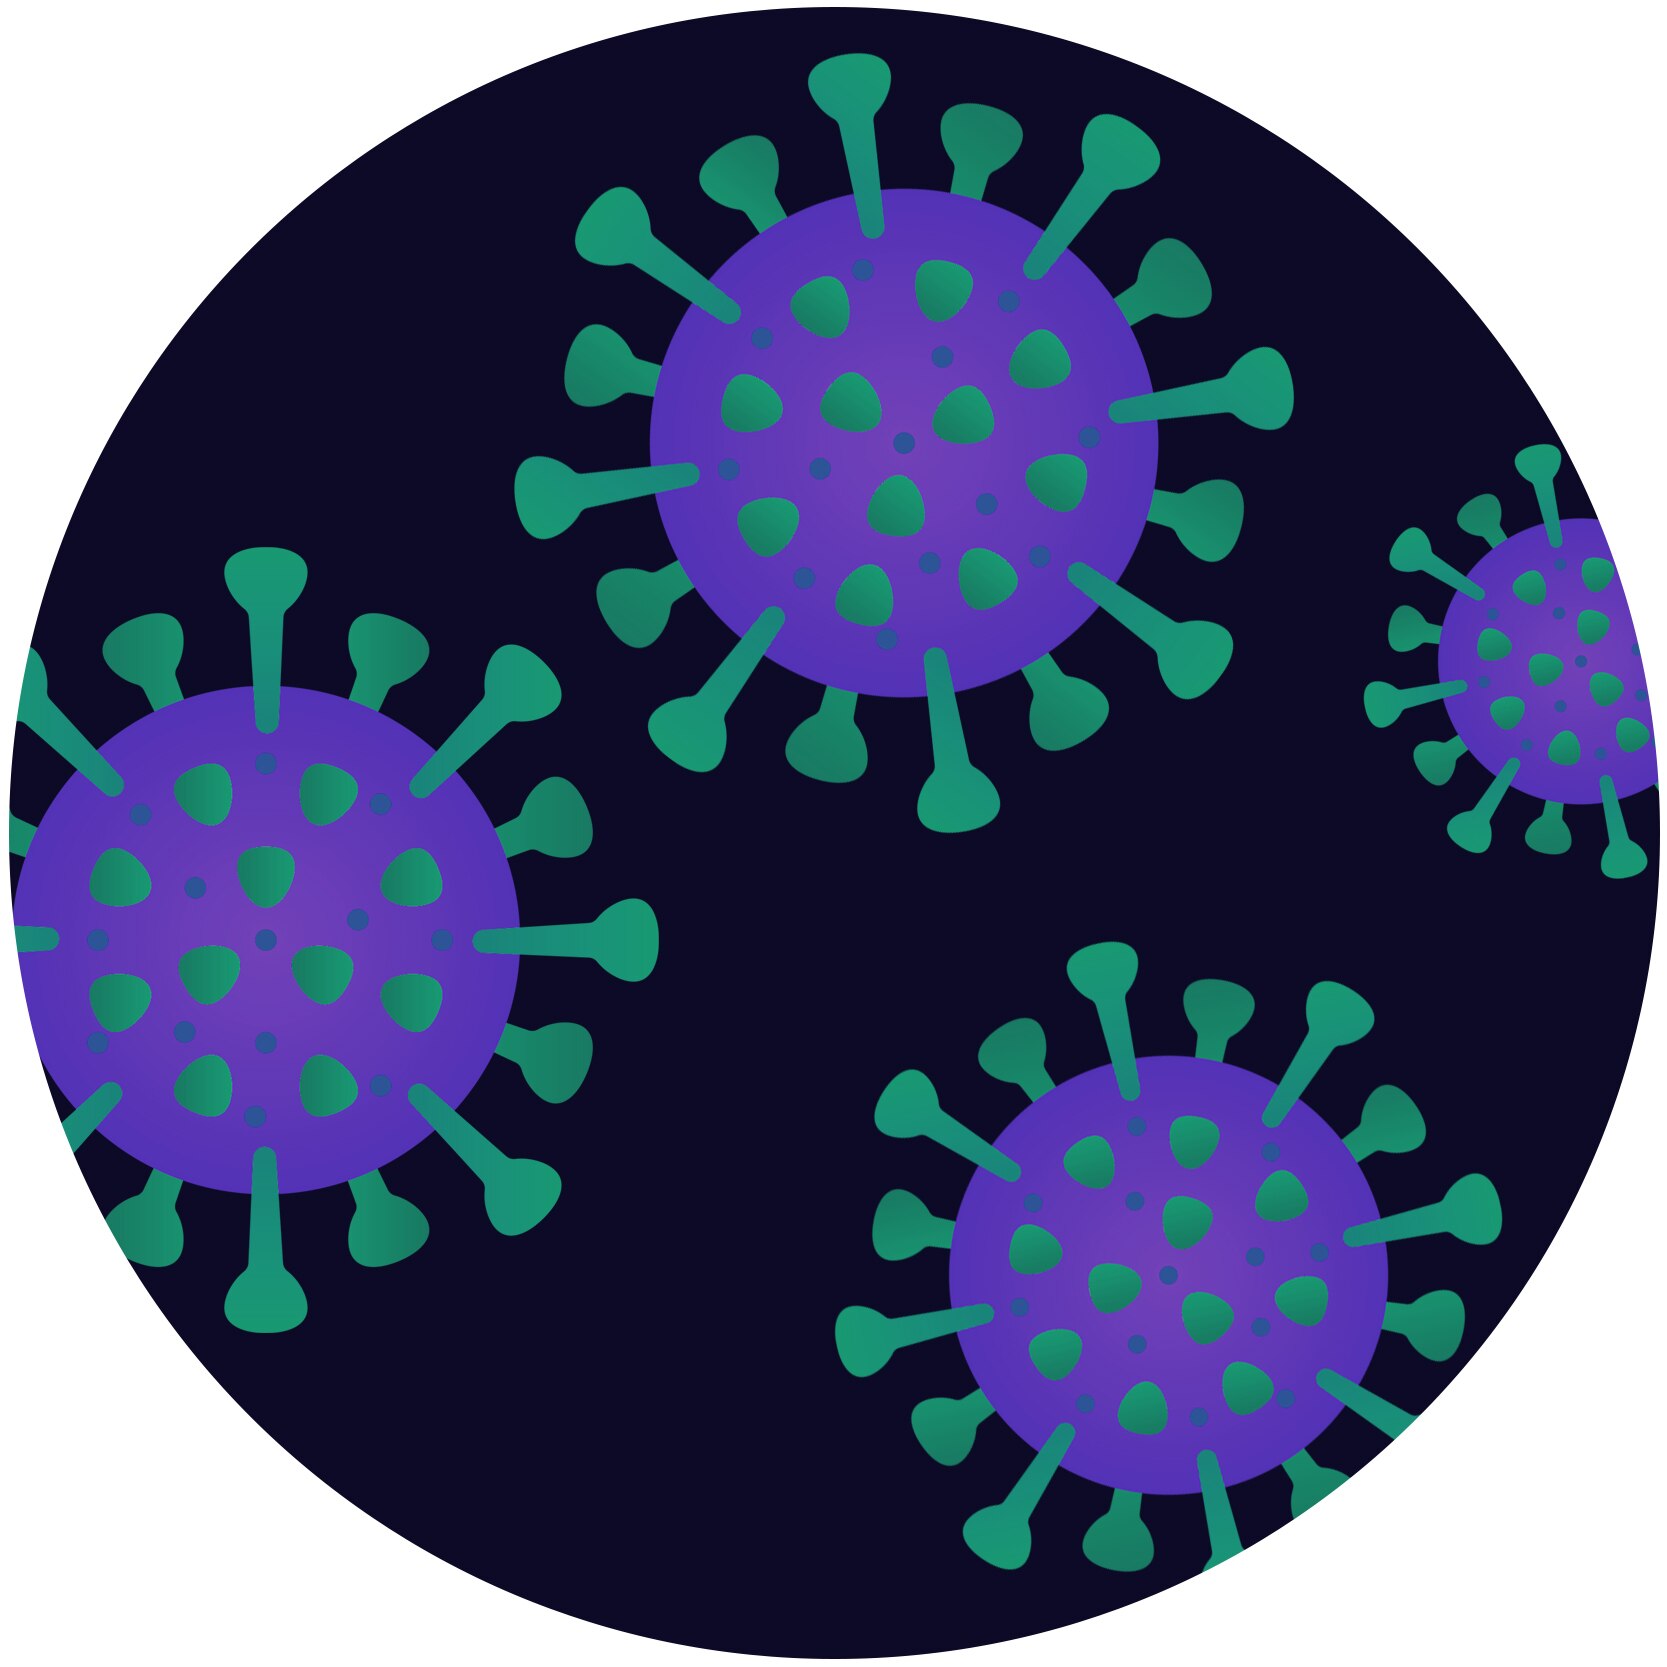 A graphic representation of the influenza virus